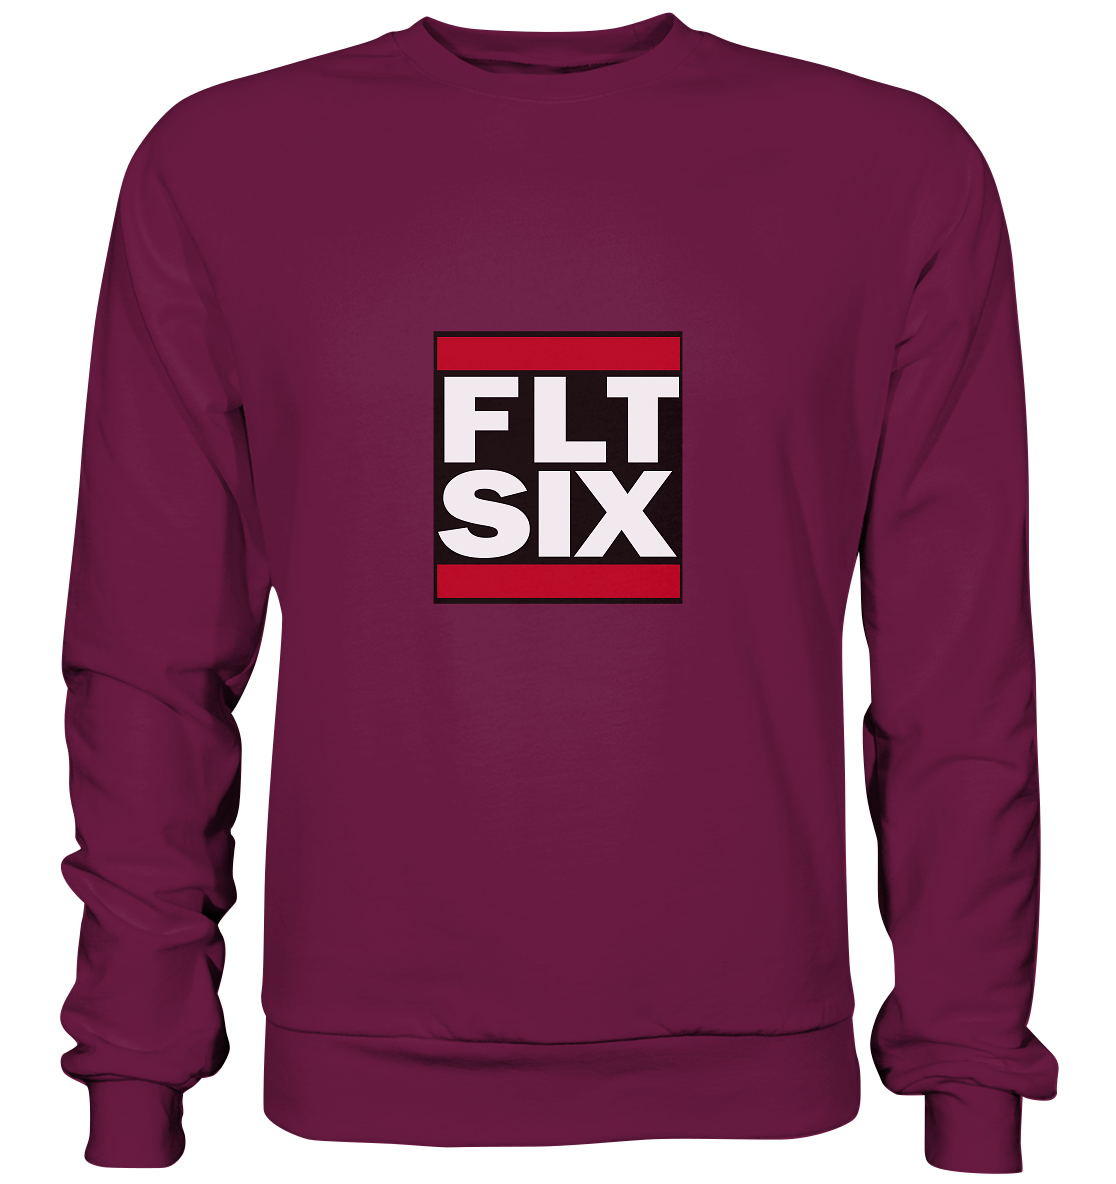 FLT SIX  - Premium Sweatshirt